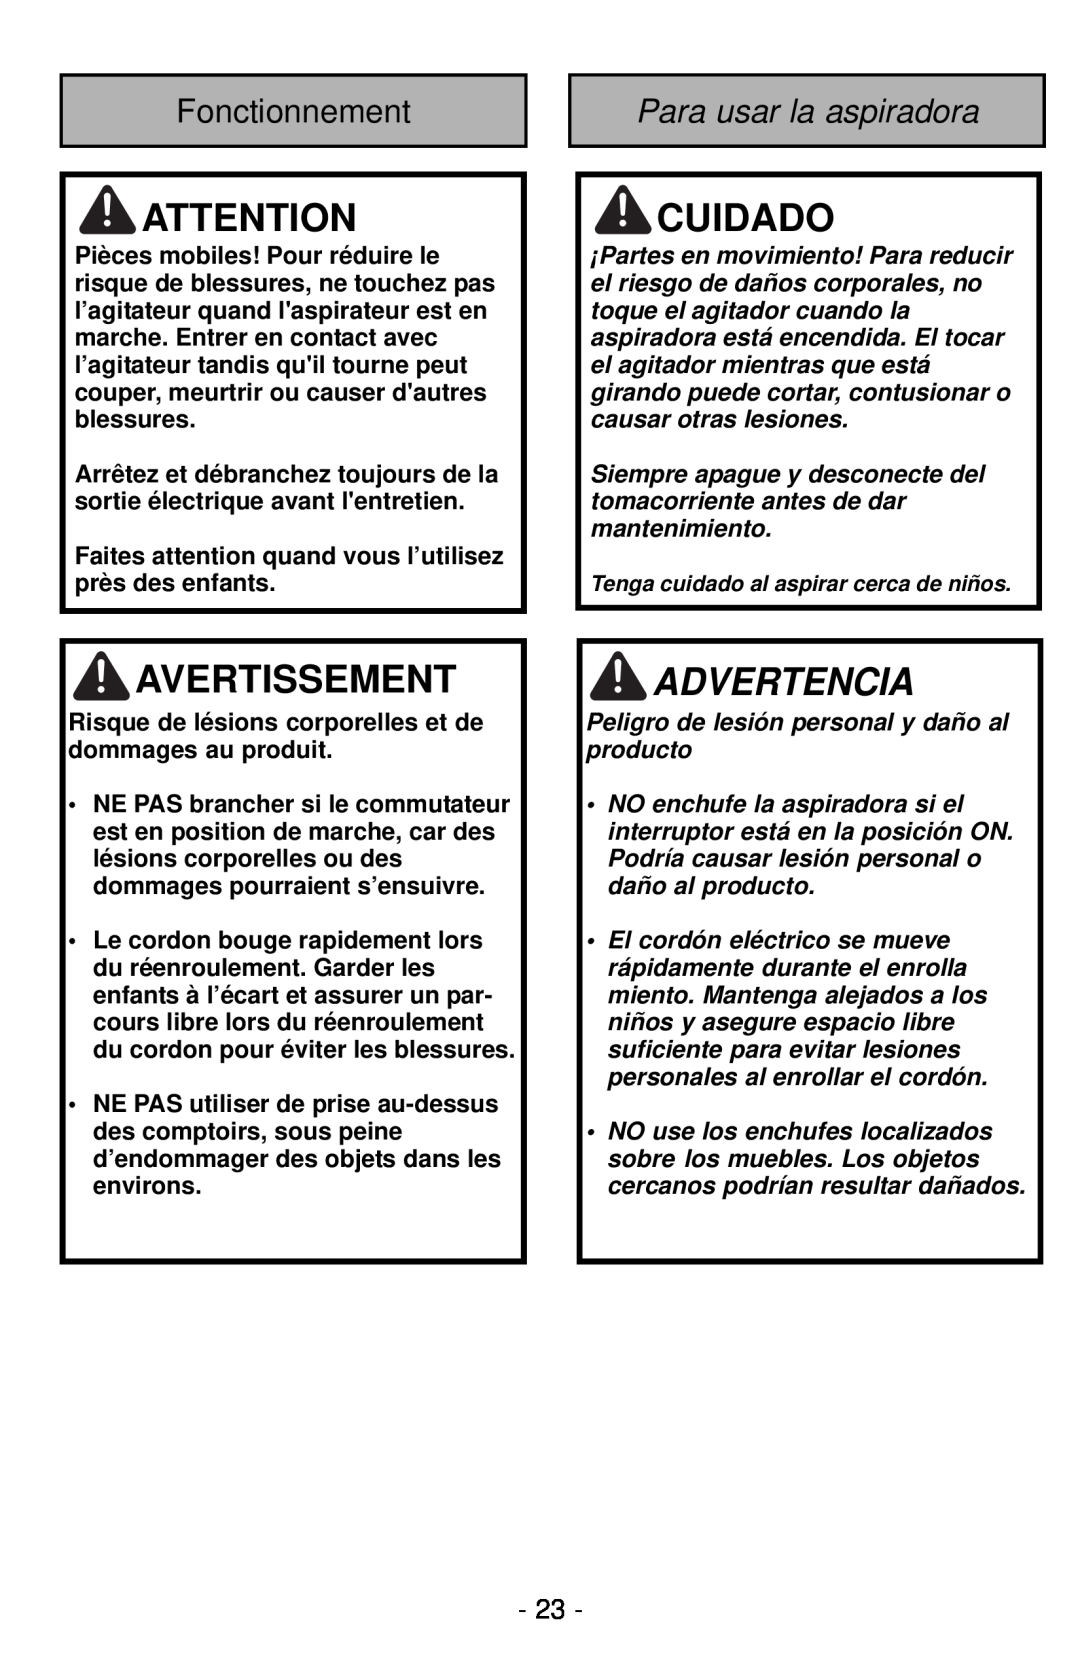 Panasonic MC-CG901 operating instructions Cuidado, Fonctionnement, Para usar la aspiradora, Avertissement, Advertencia 